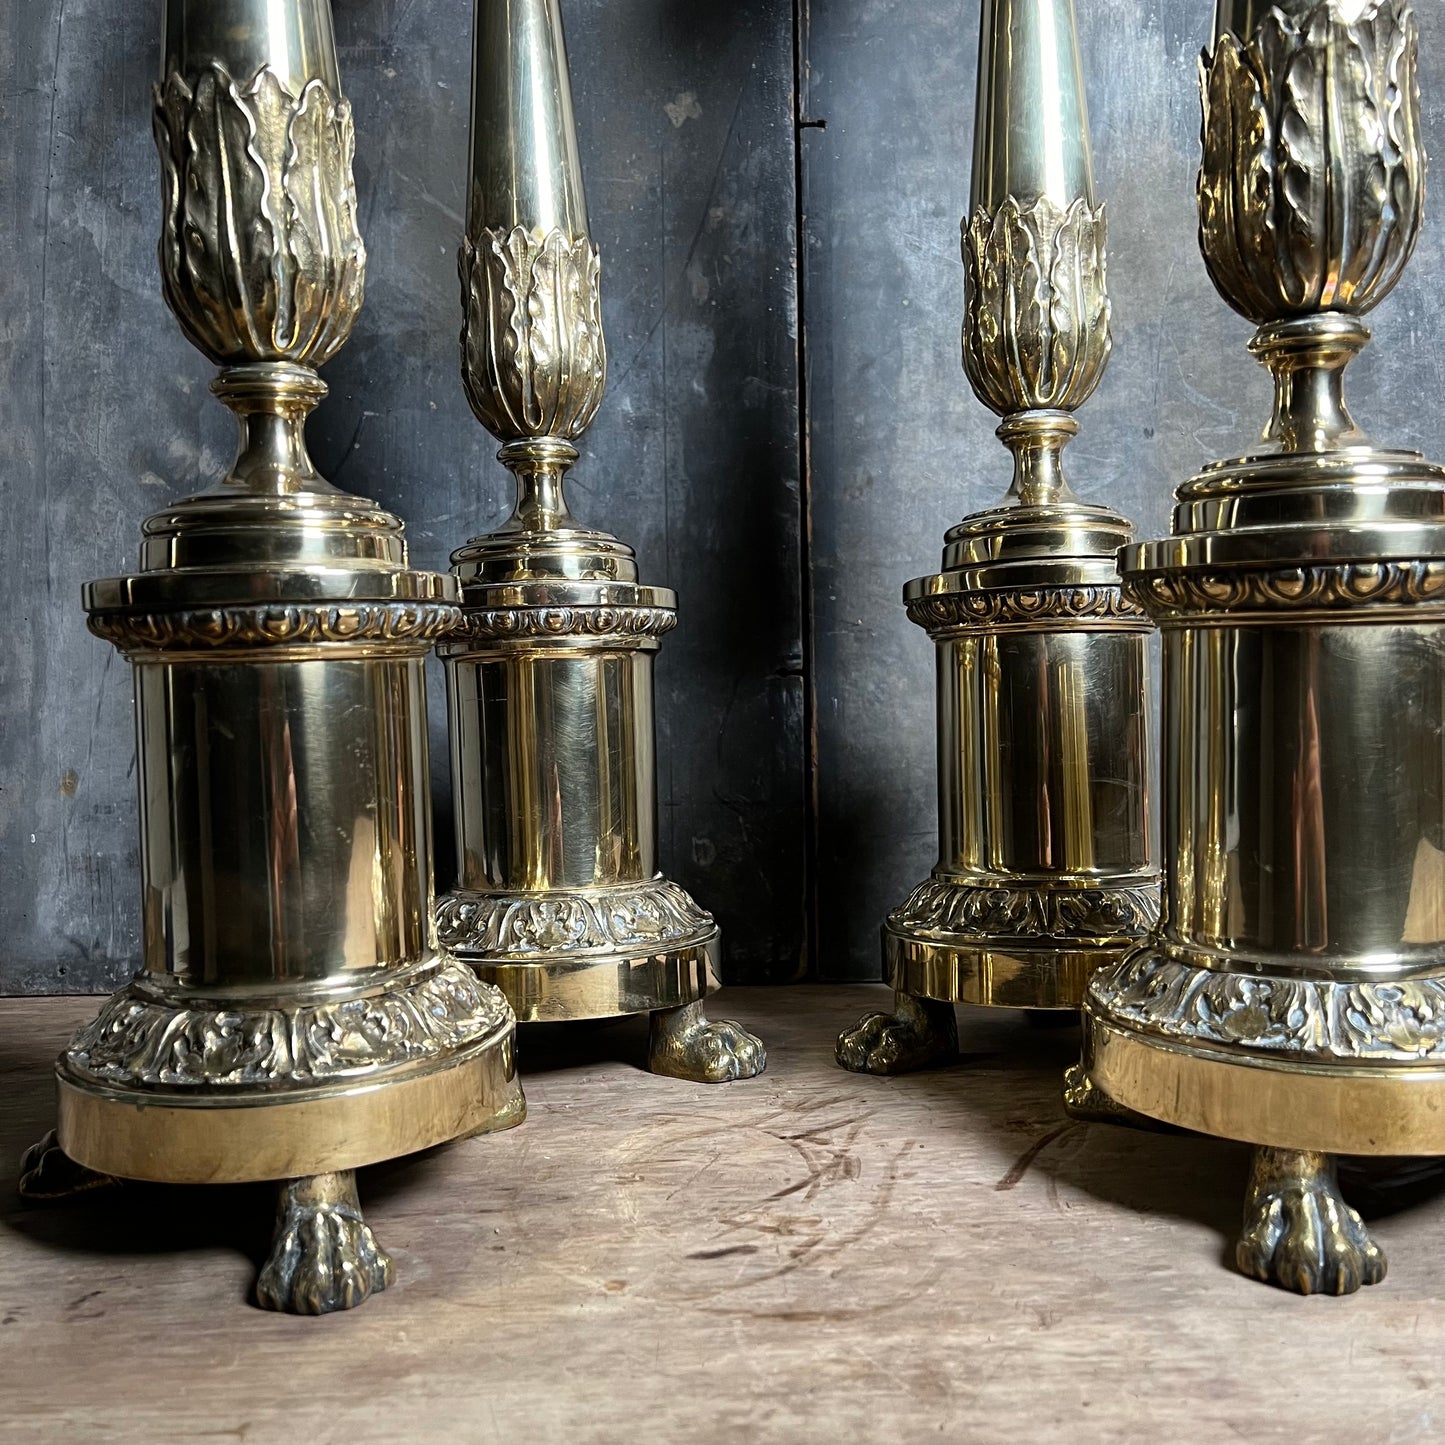 Set of Four Large Ecclesiastical Brass Altar Candlesticks c.1850